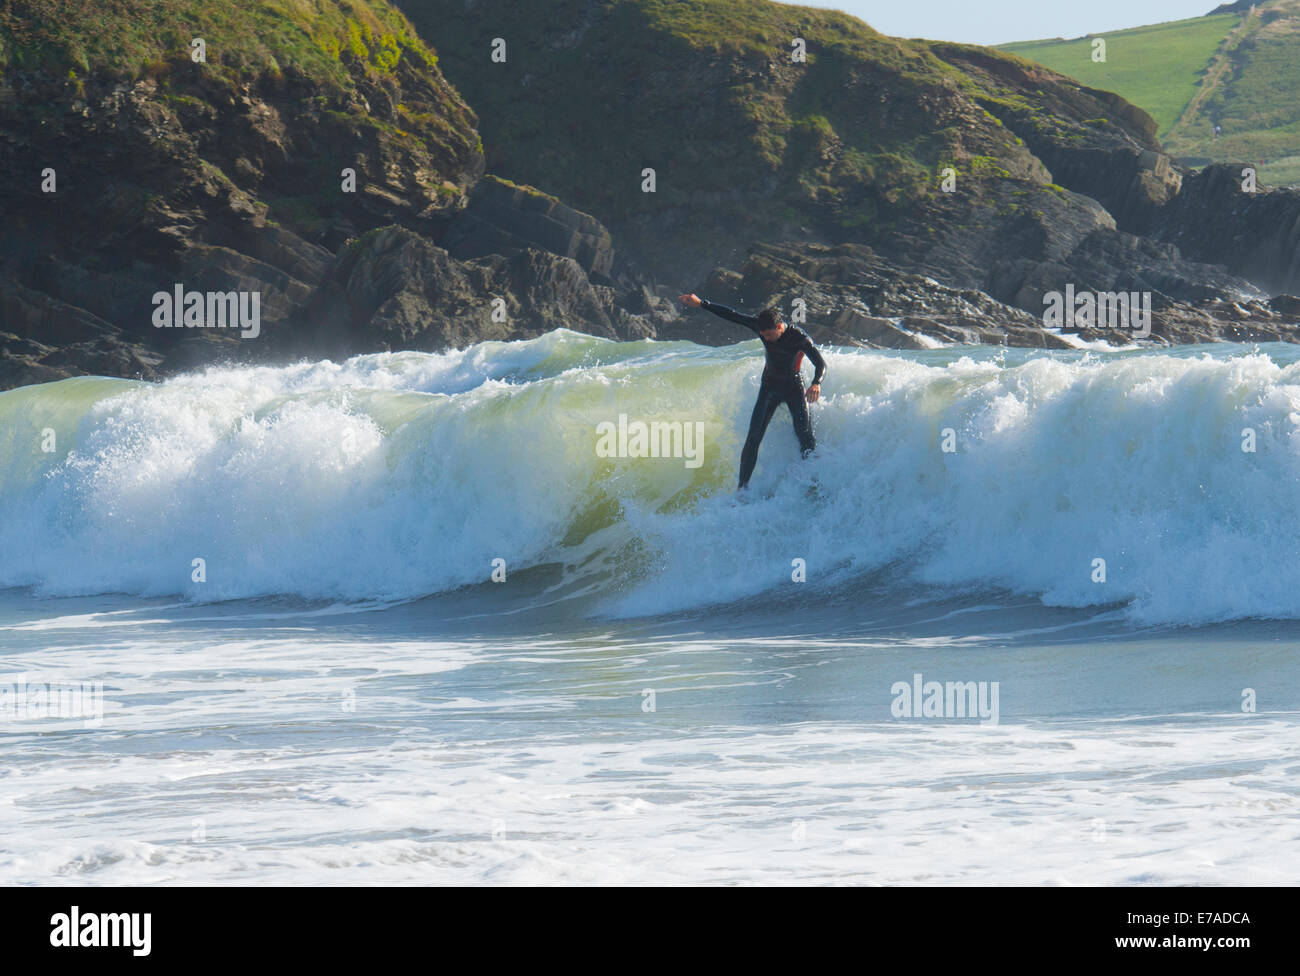 2014 Challaborough Bay, South Devon: Surfer riding wave with rocky coastline in background Stock Photo